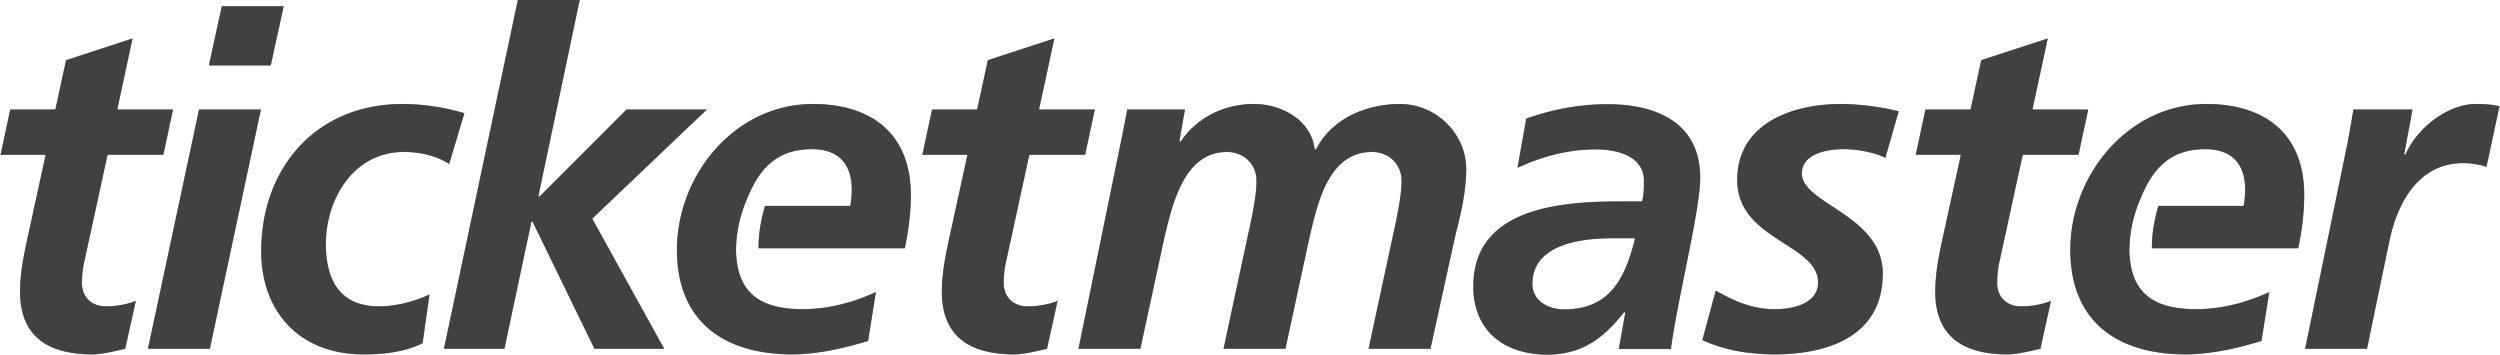 ticketmaster logo.png